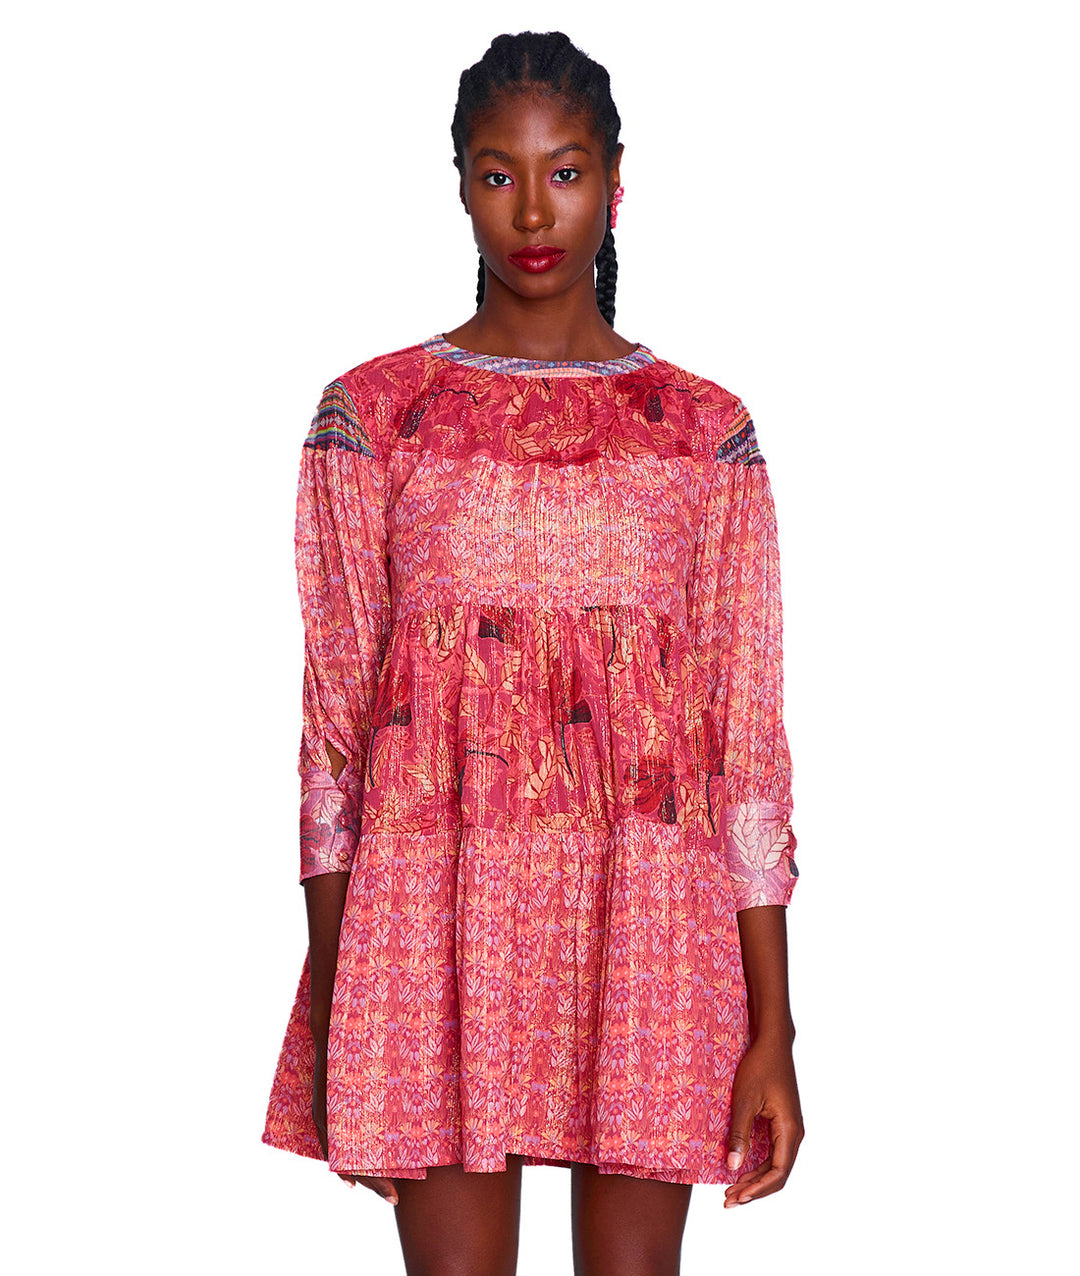 rooprang dresses A-PARKAR_4_B6 Pure Cotton Petticoat Price in